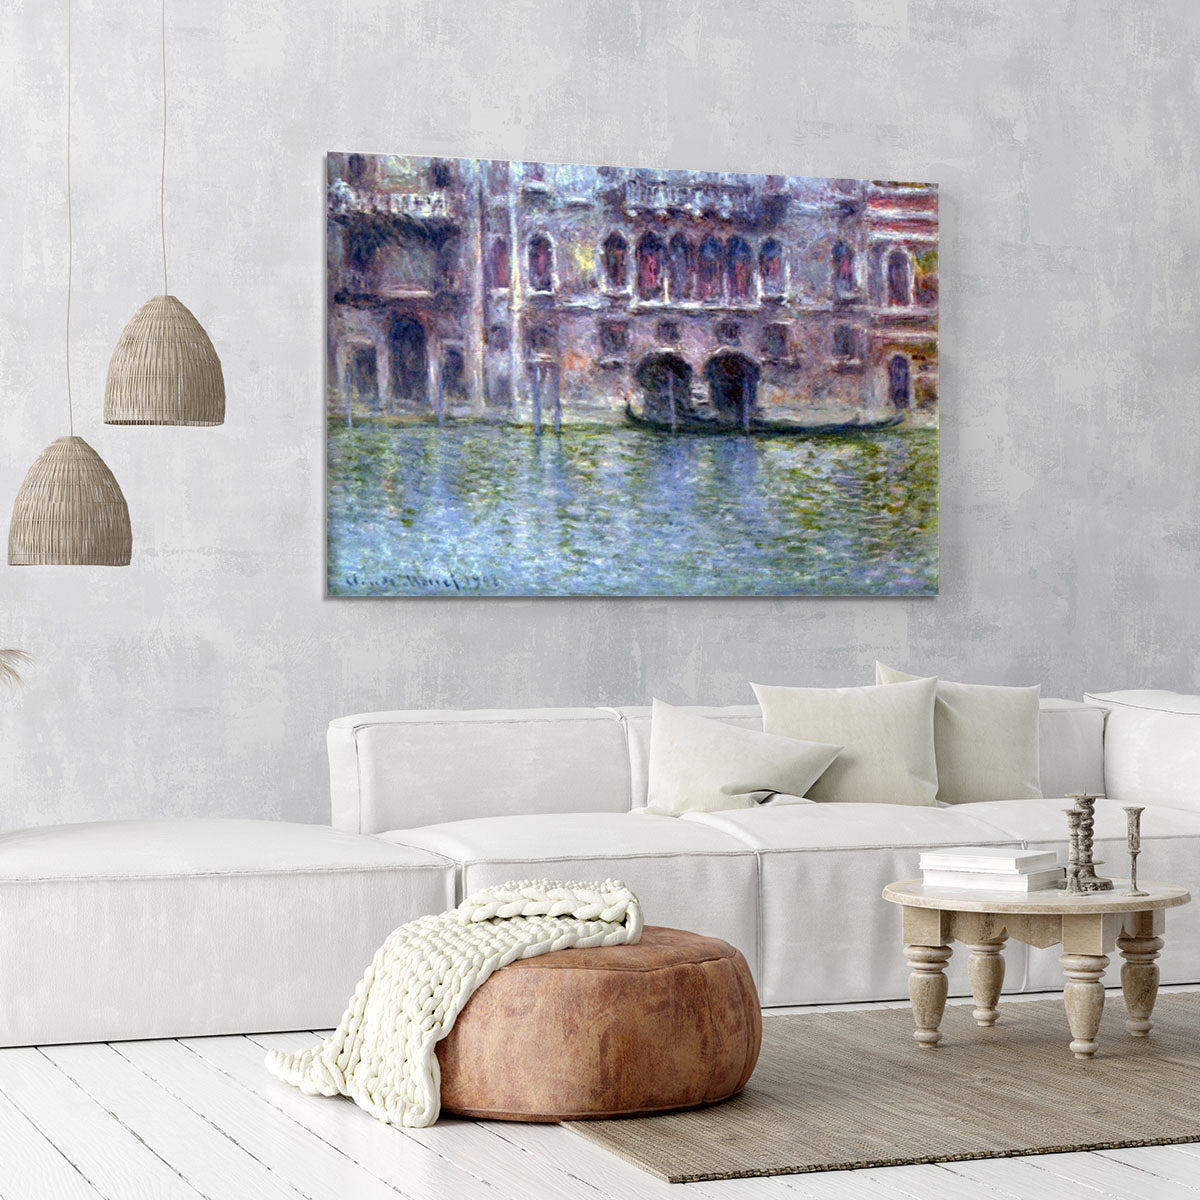 Palazzo da Mula Venice by Monet Canvas Print or Poster - Canvas Art Rocks - 6